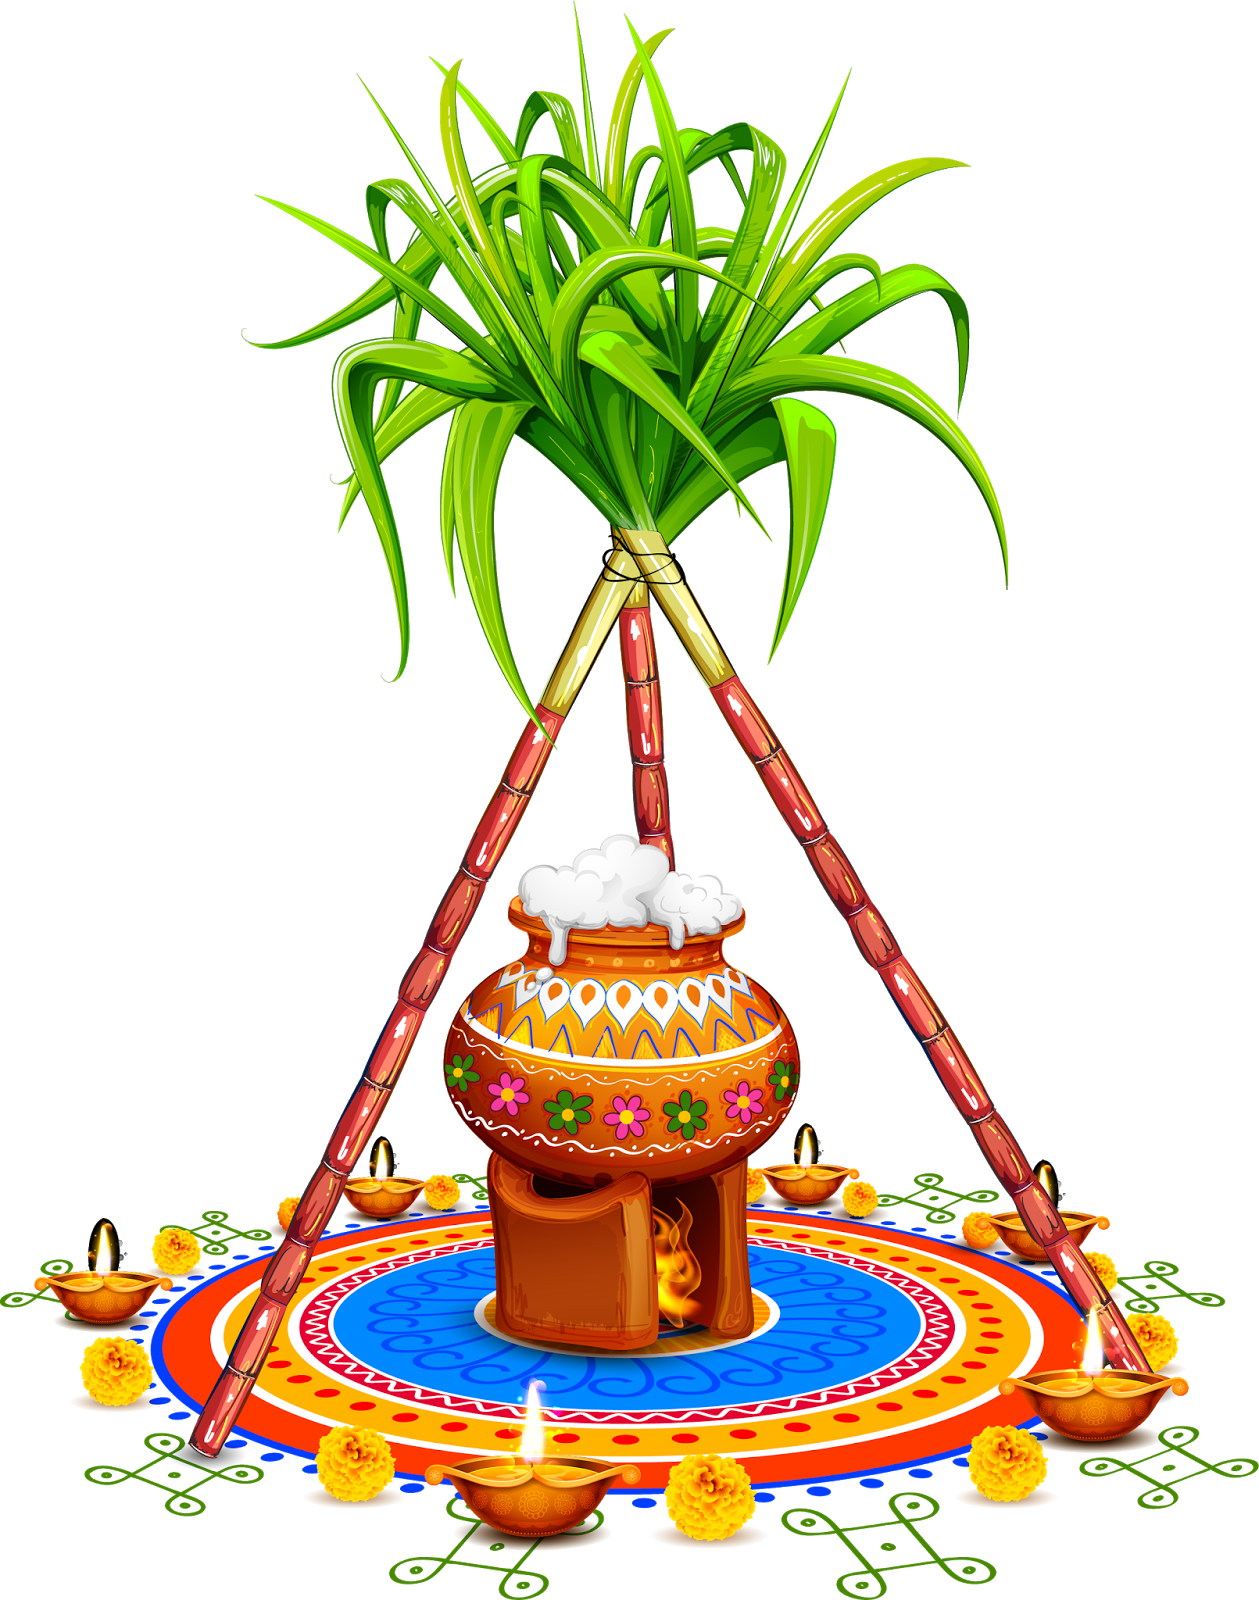 Pongal Pot Vector Image Free Download, Sugar Cane with Pongal Pot Png Free Downoad. PNG POT. Vector Image. Floral Designs. God Image. hd 4k Png. Religious Image. Festival Vectors. For Free